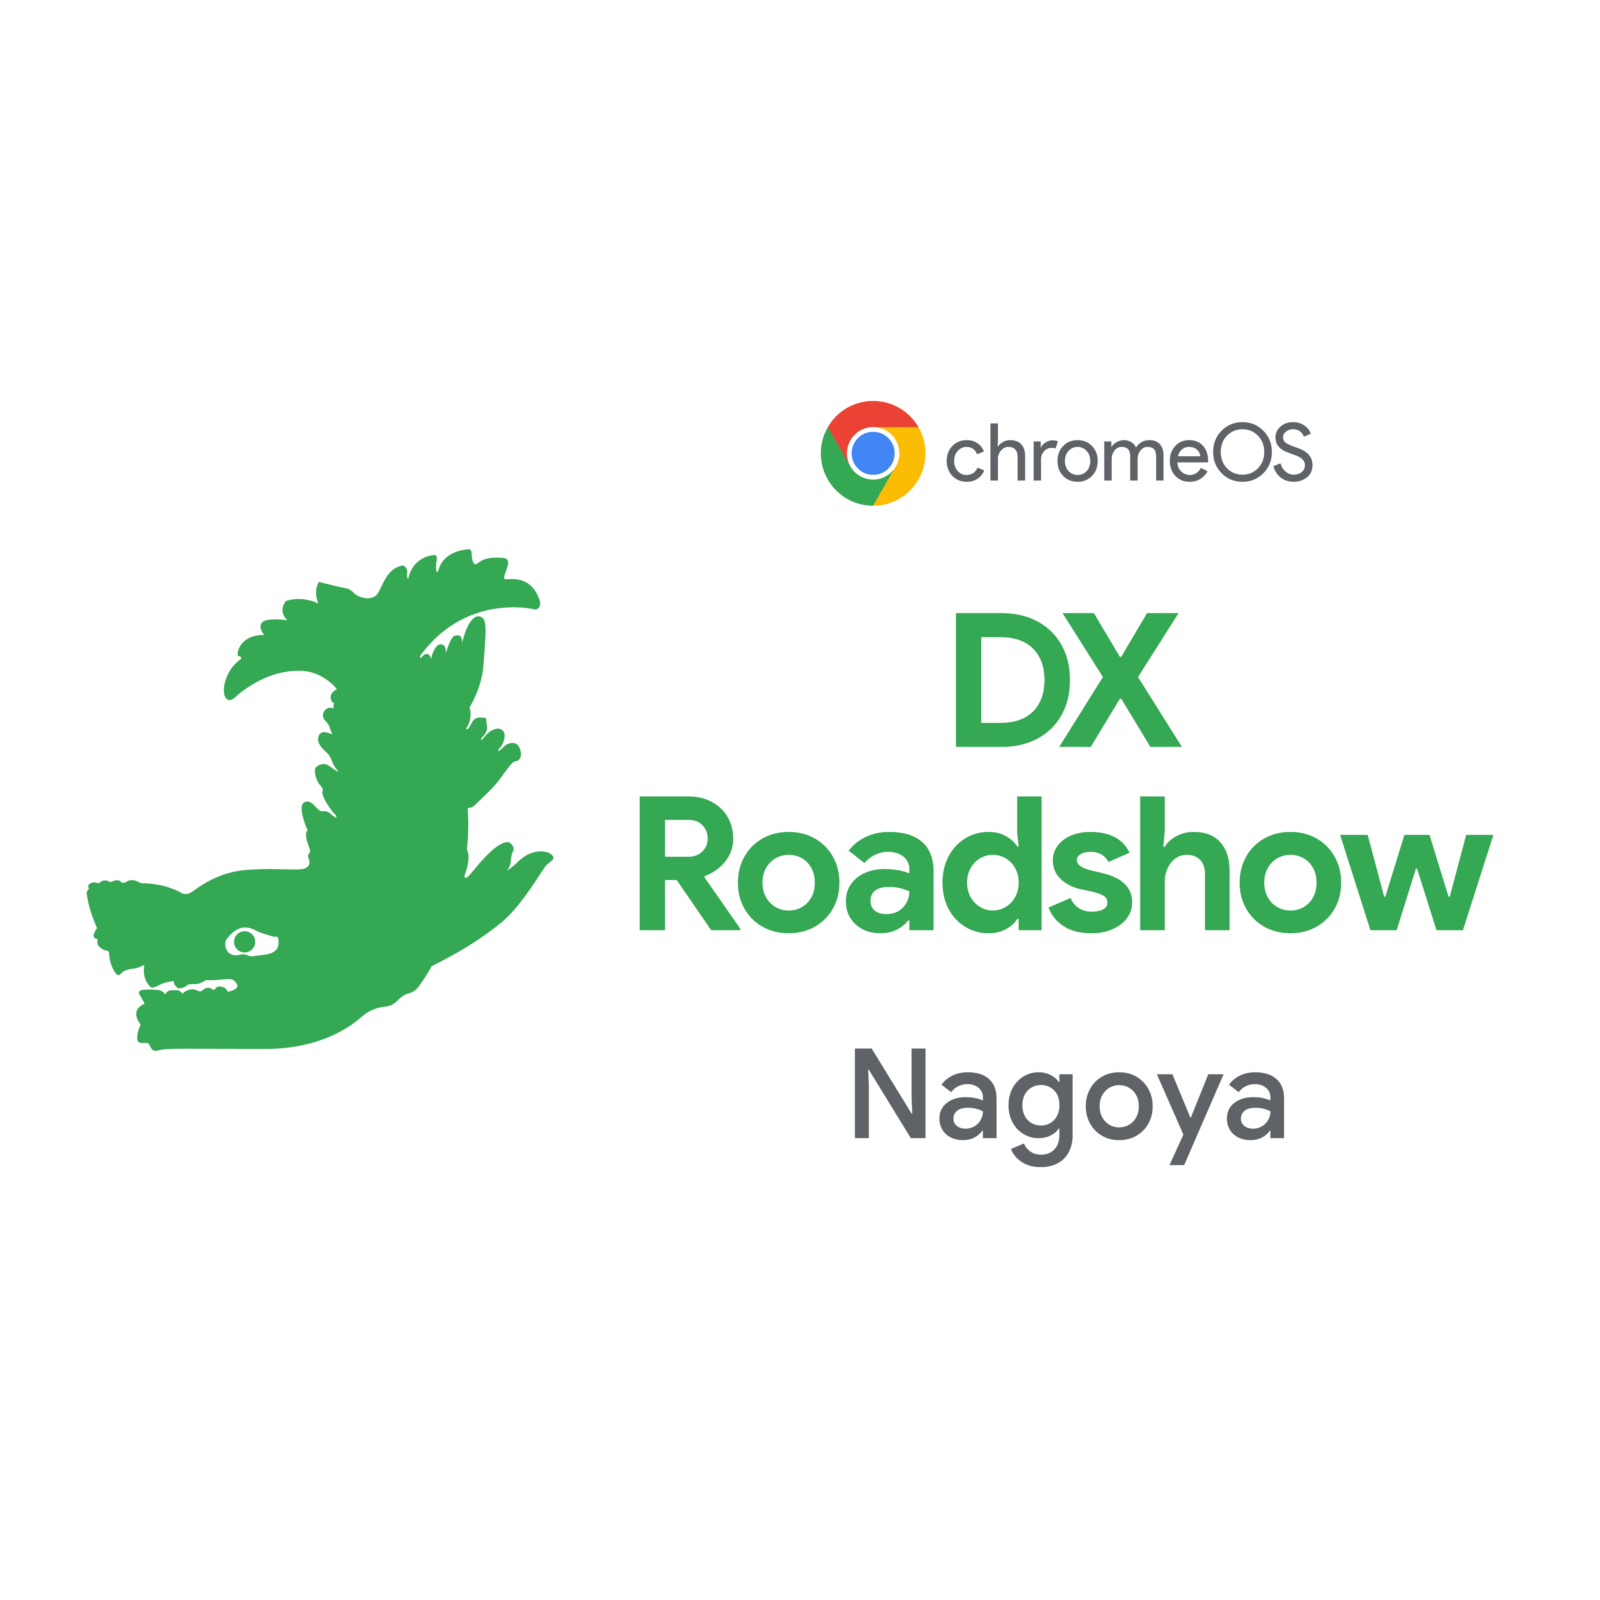 [ChromeOS] ChromeOS DX Roadshow Nagoya